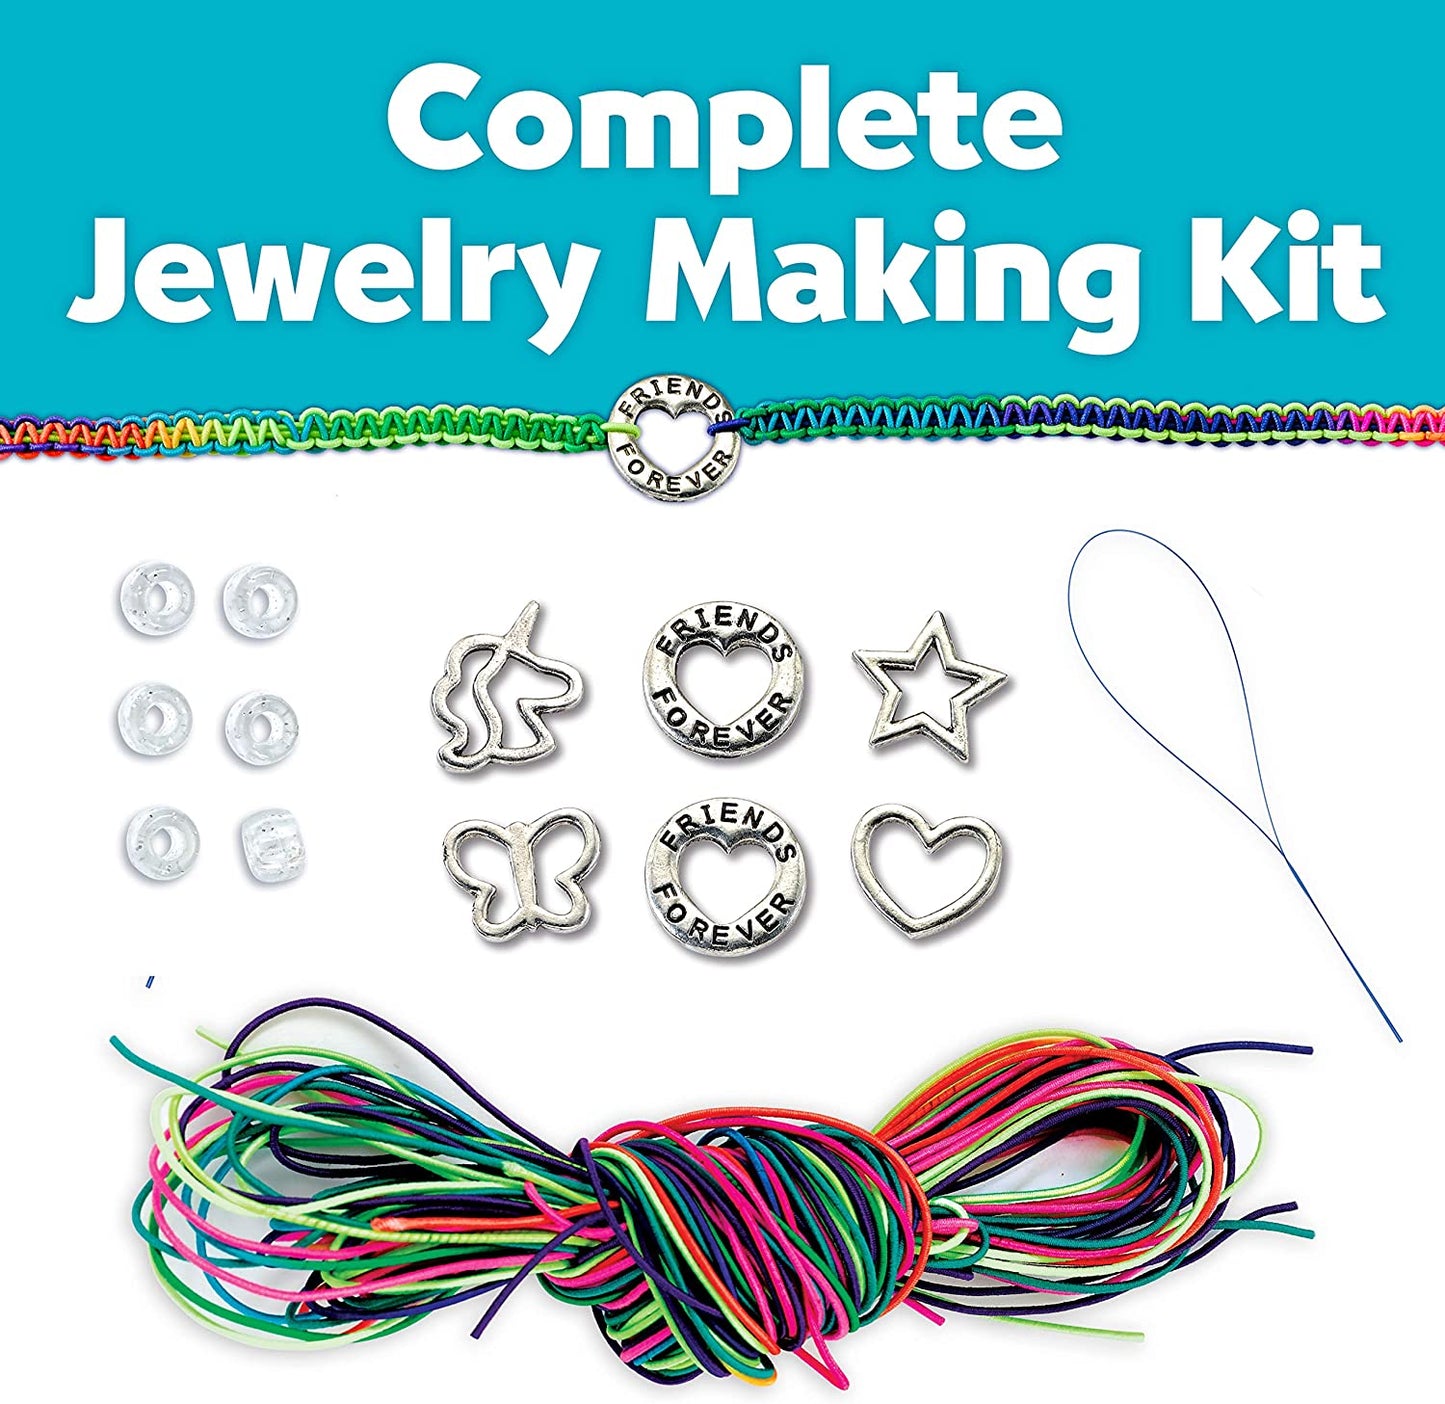 Creativity for Kids Friends Forever Bracelet Craft Kit - Create DIY 6 Friendship Charm Bracelets